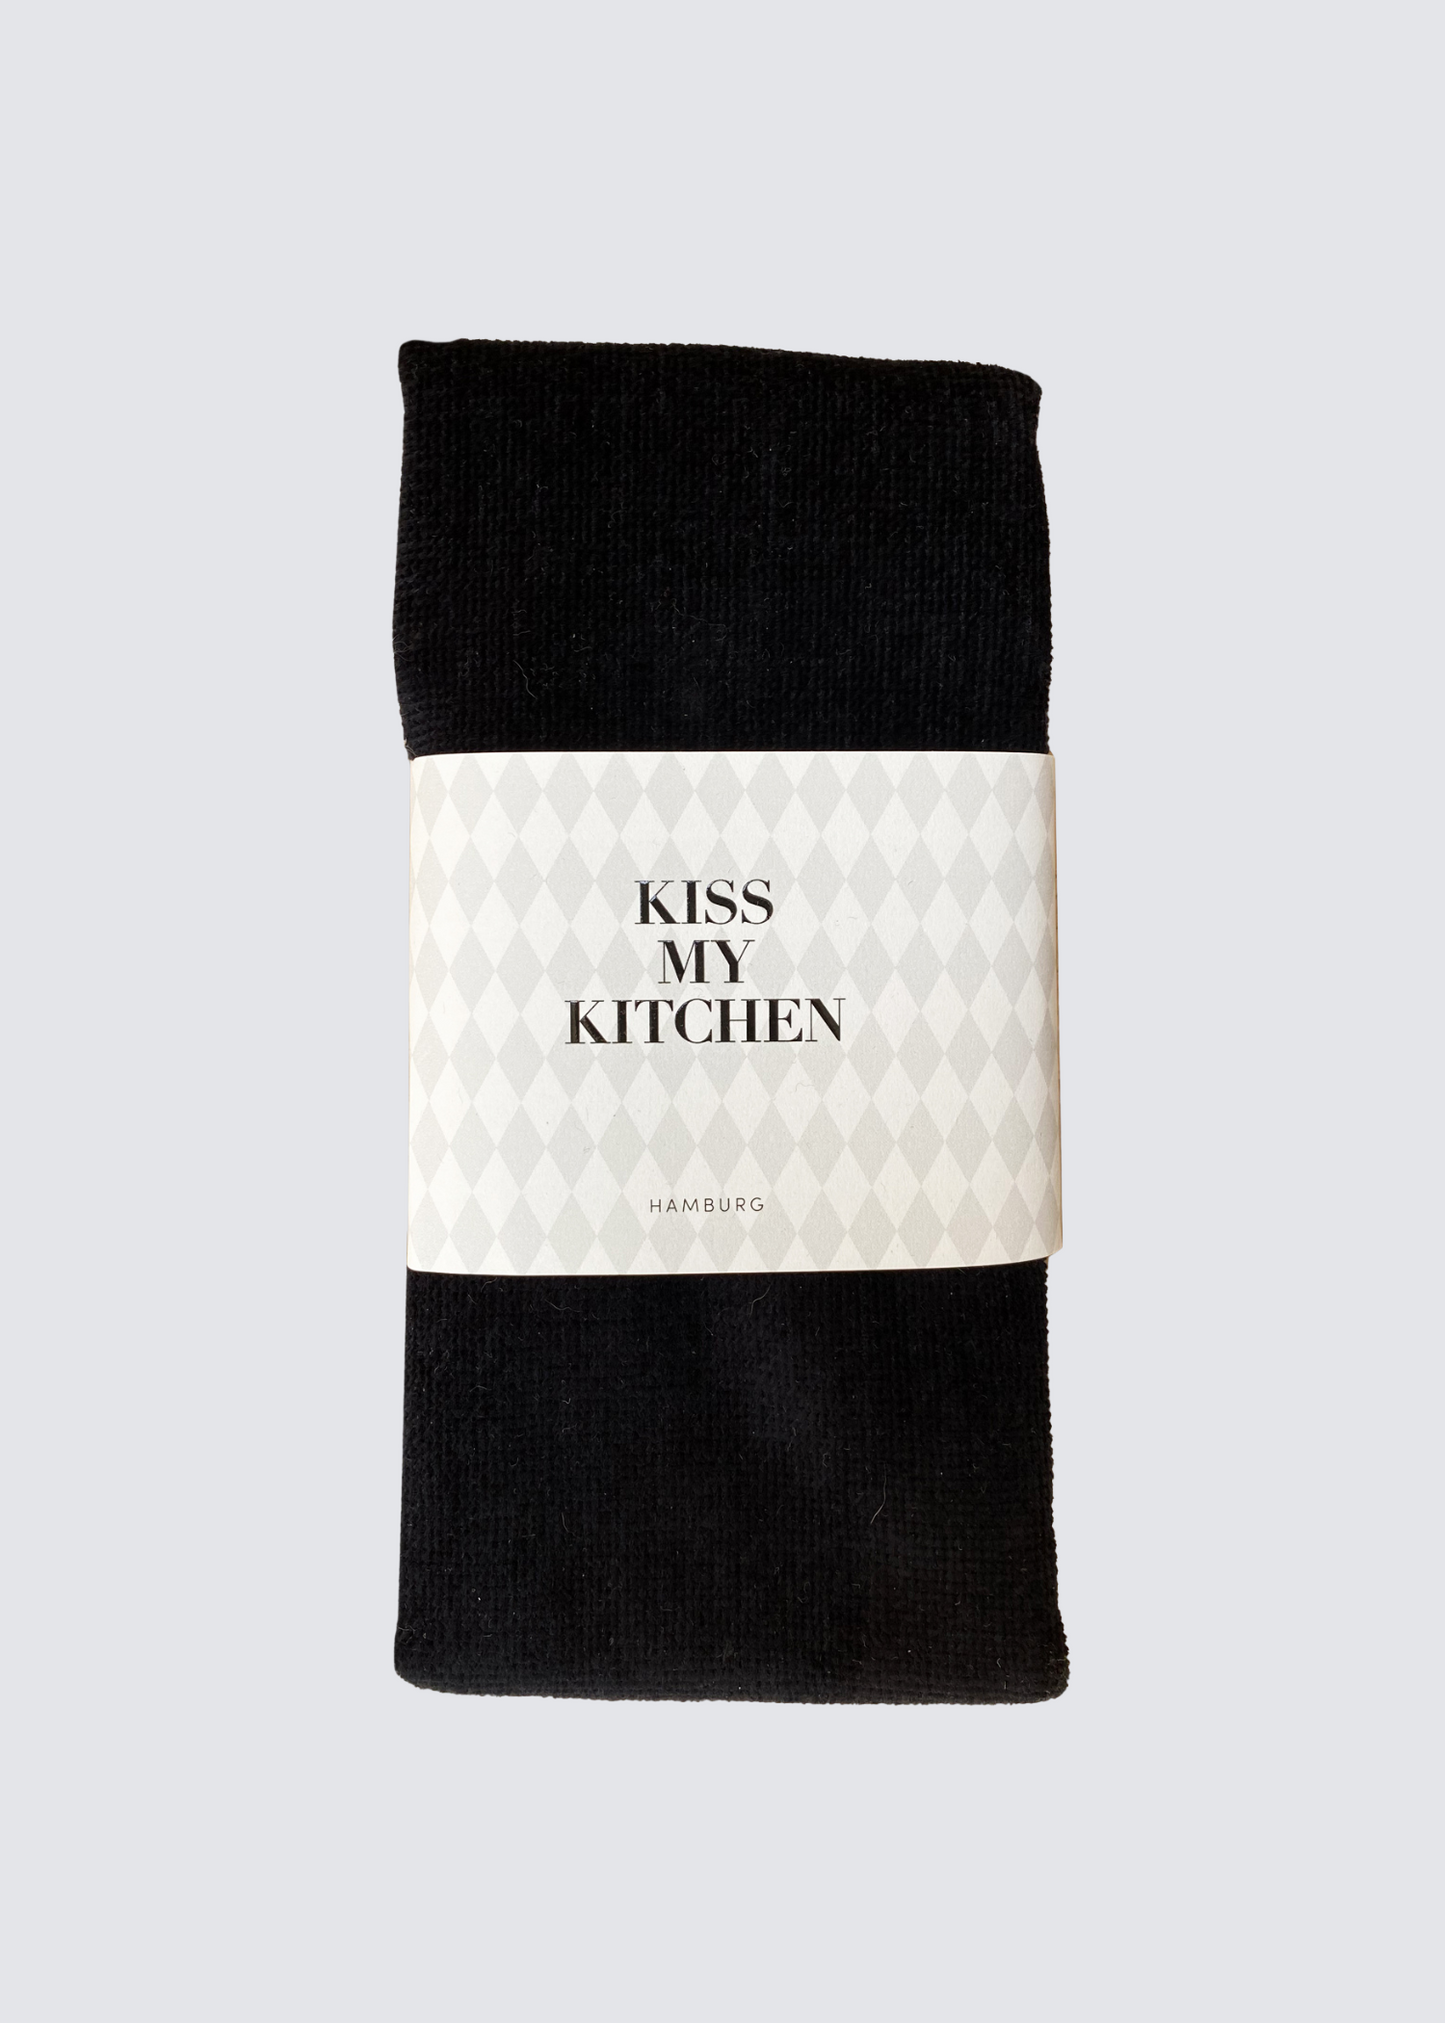 Soap/Soft Cotton Towel, Geschenkeset